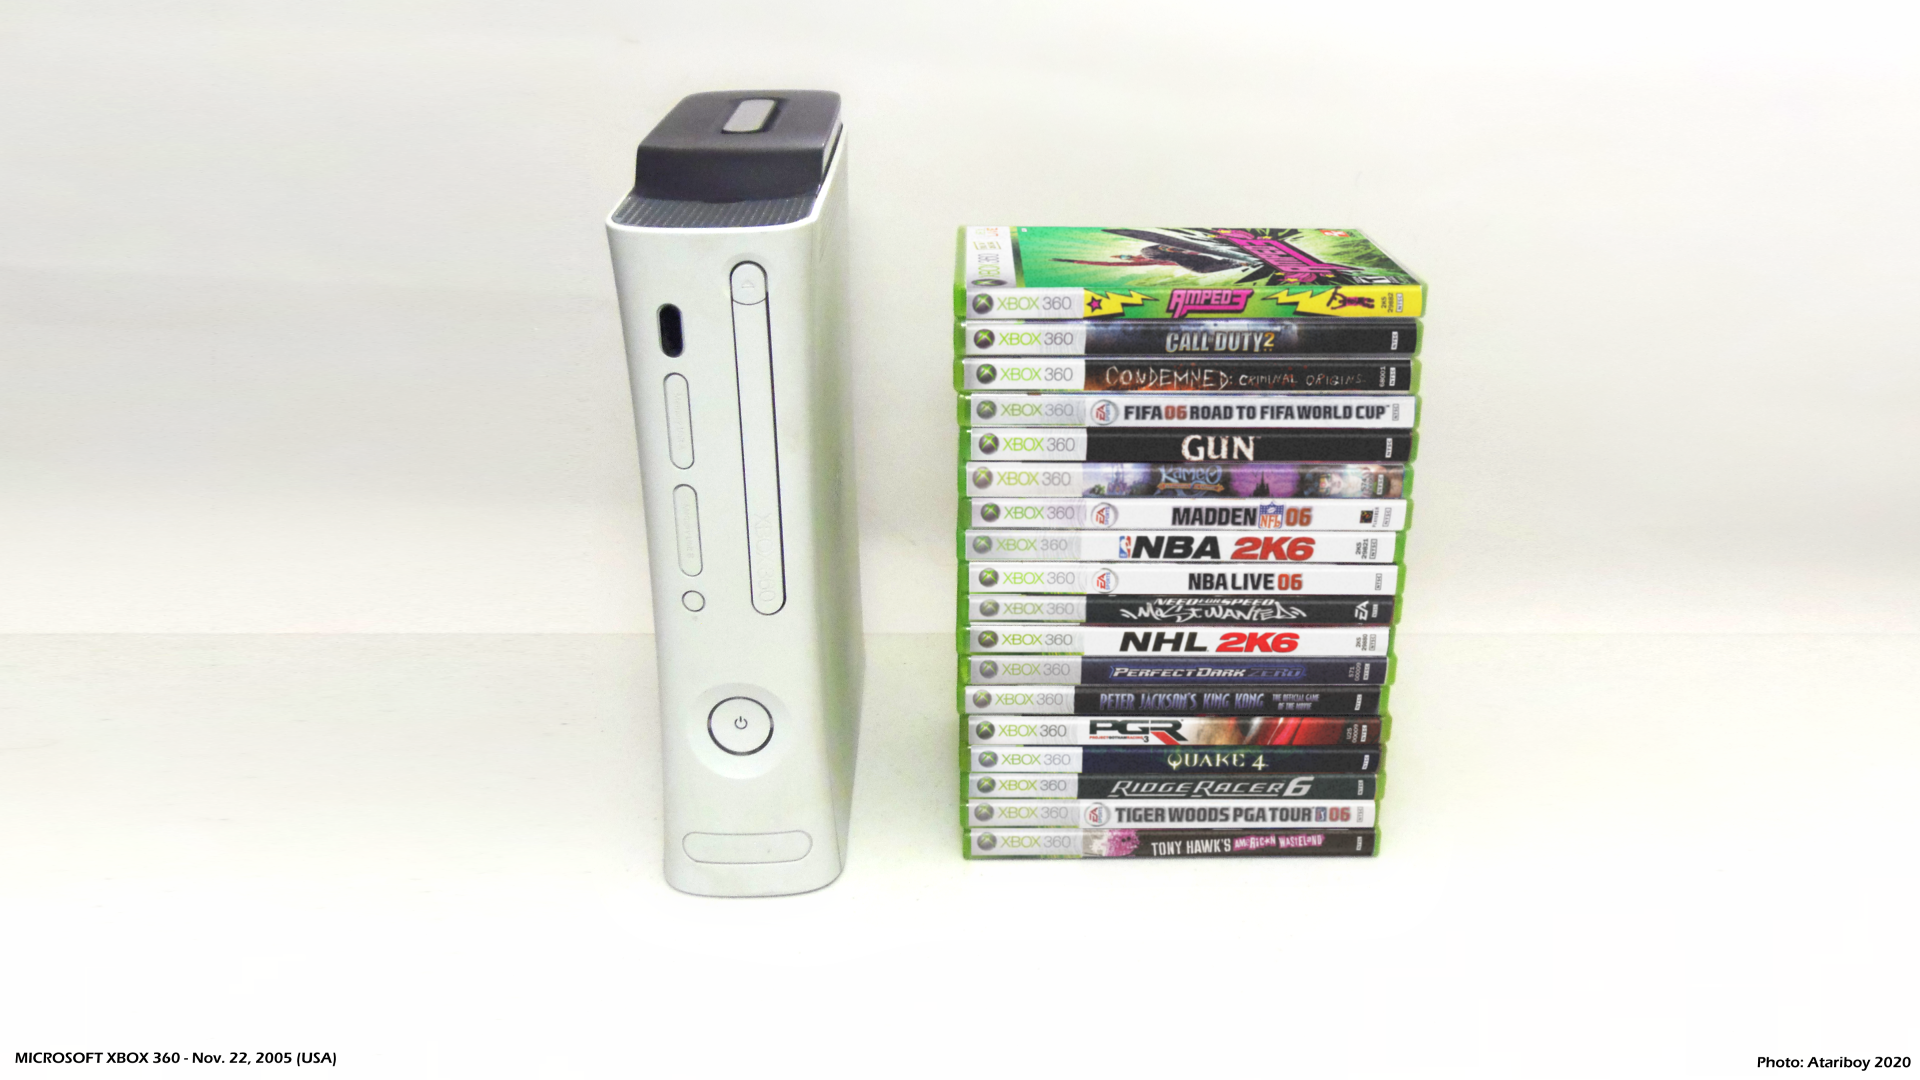 Microsoft's Xbox 360 Launch